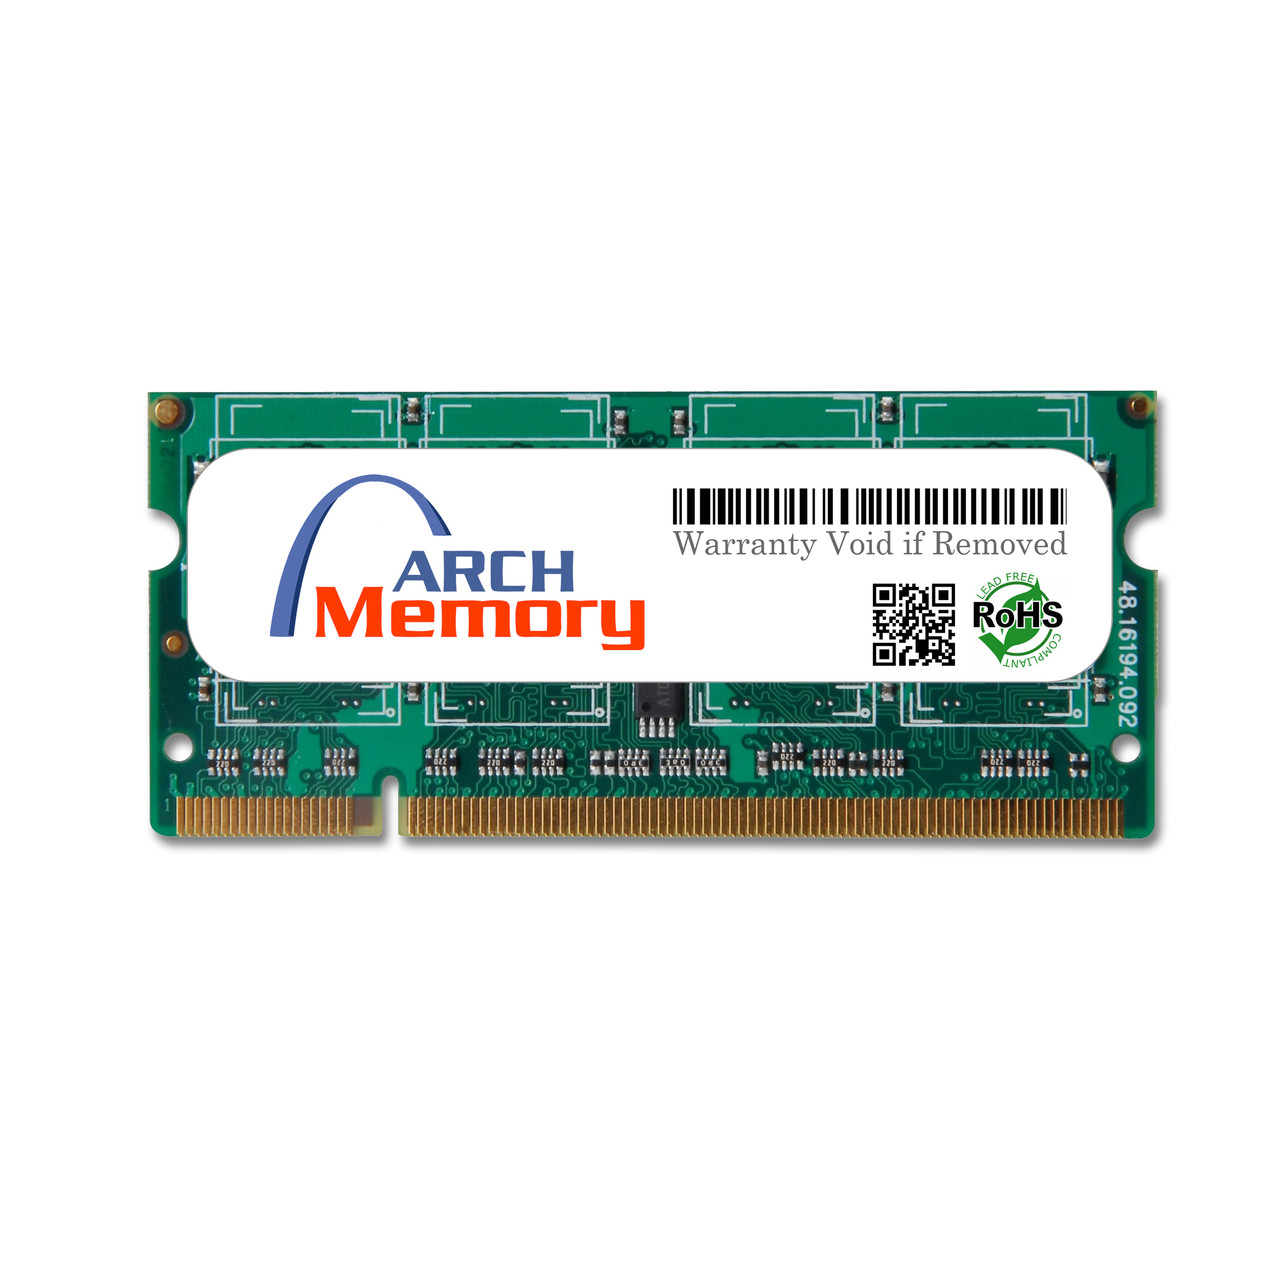 eBay*1GB 200-Pin DDR-400 PC3200 Sodimm (2Rx8) RAM